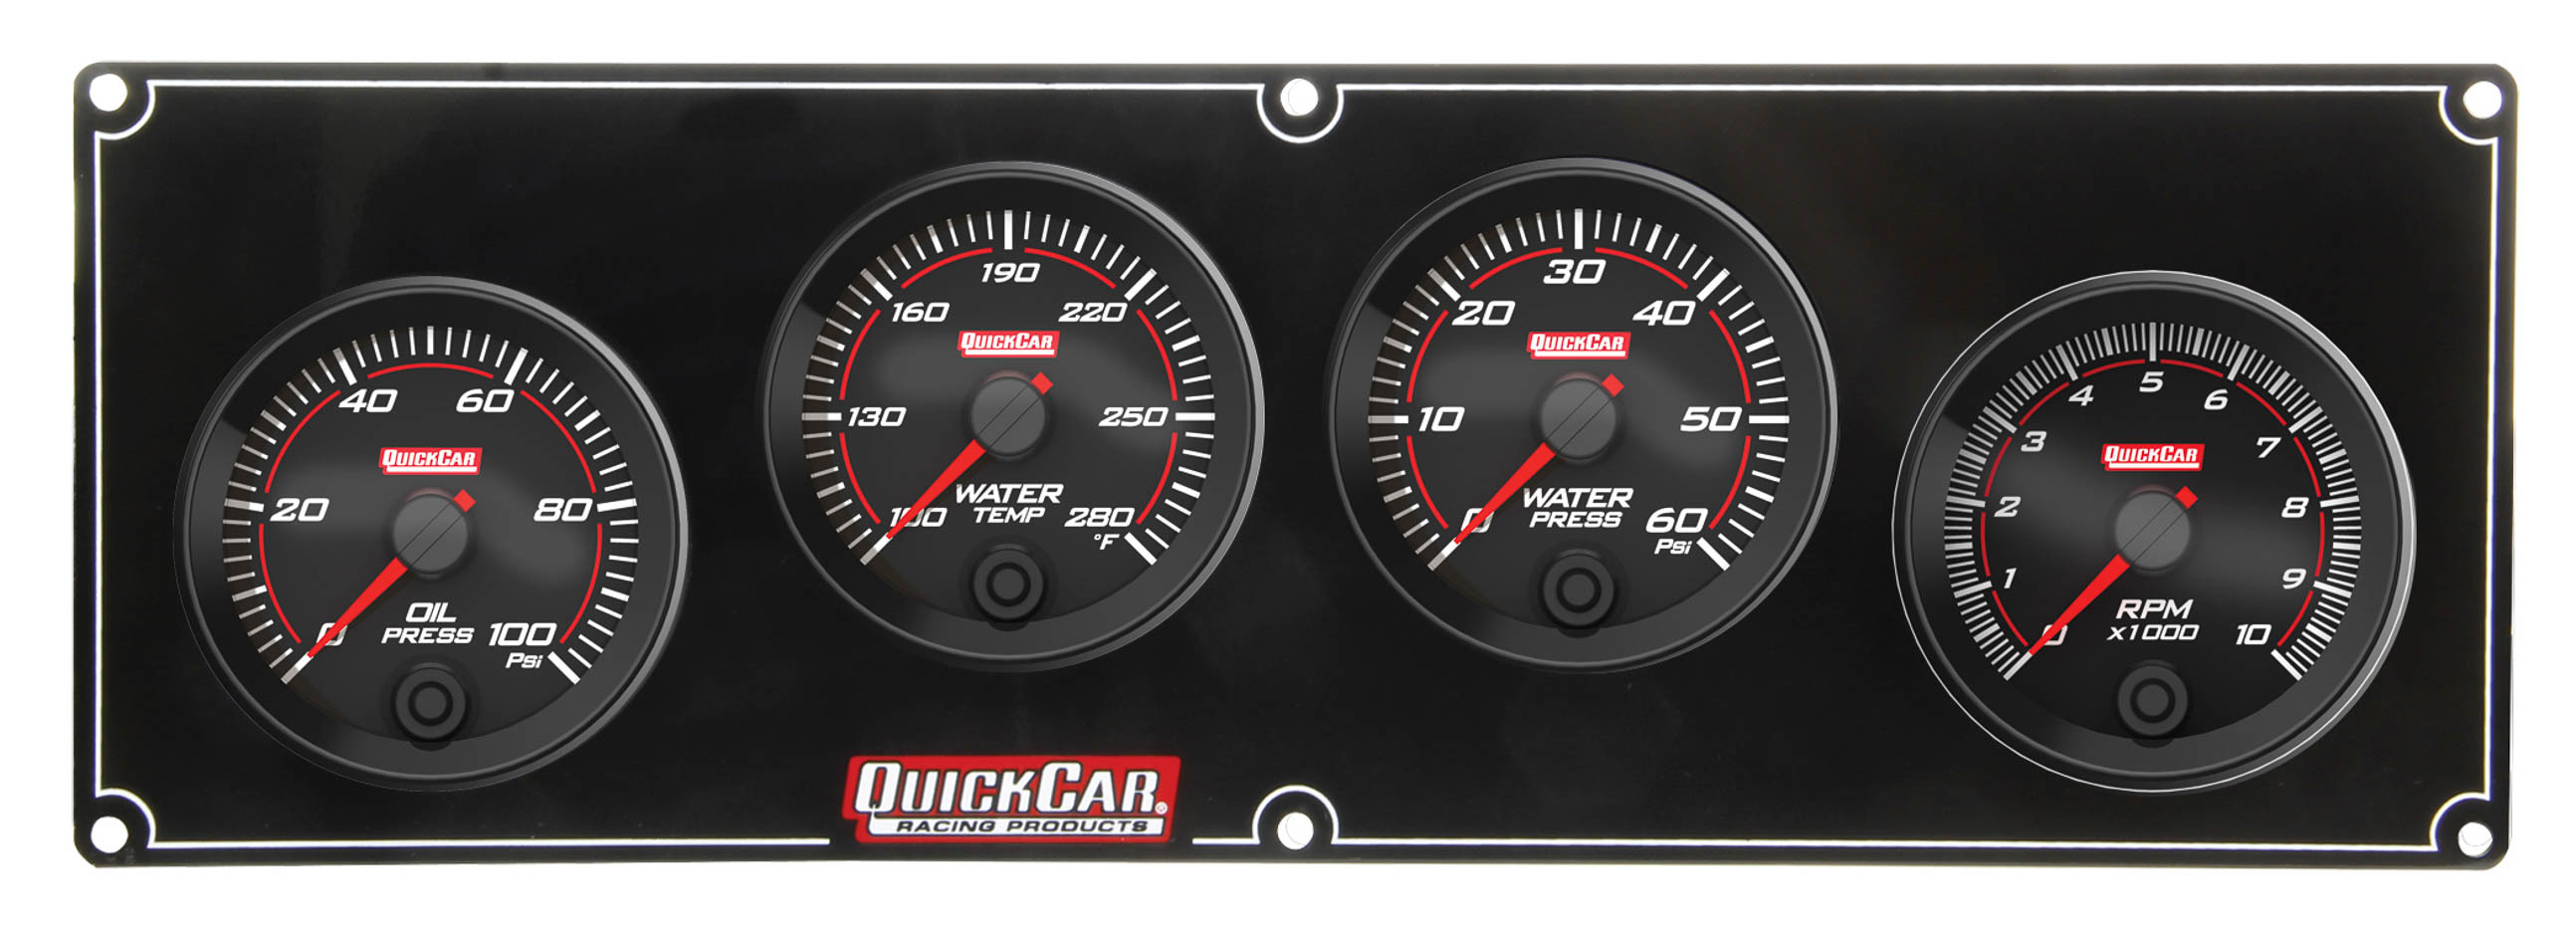 QuickCar 69-3246 Gauge Panel Assembly, Redline, Oil Pressure / Water Temperature / Water Pressure / 2-5/8 in Tachometer, Black Face, Kit